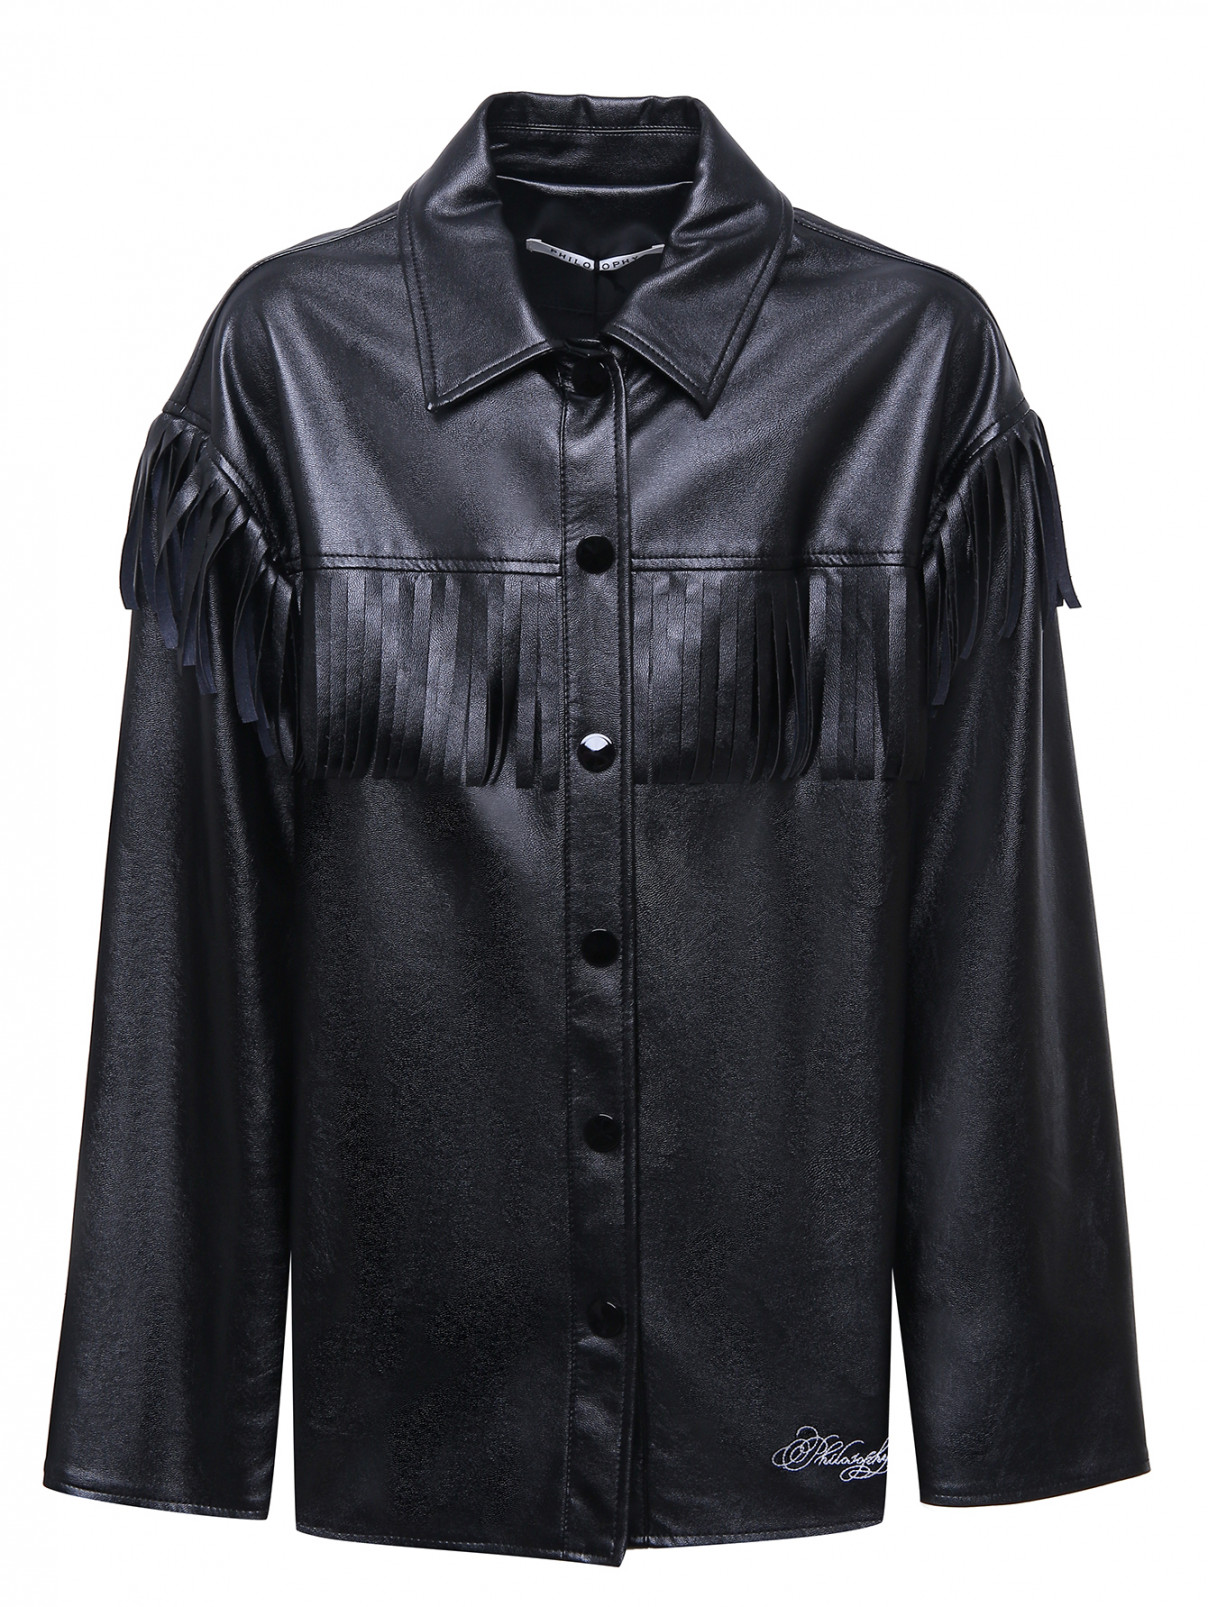 Куртка на кнопках с бахромой Philosophy di Lorenzo Serafini  –  Общий вид  – Цвет:  Черный